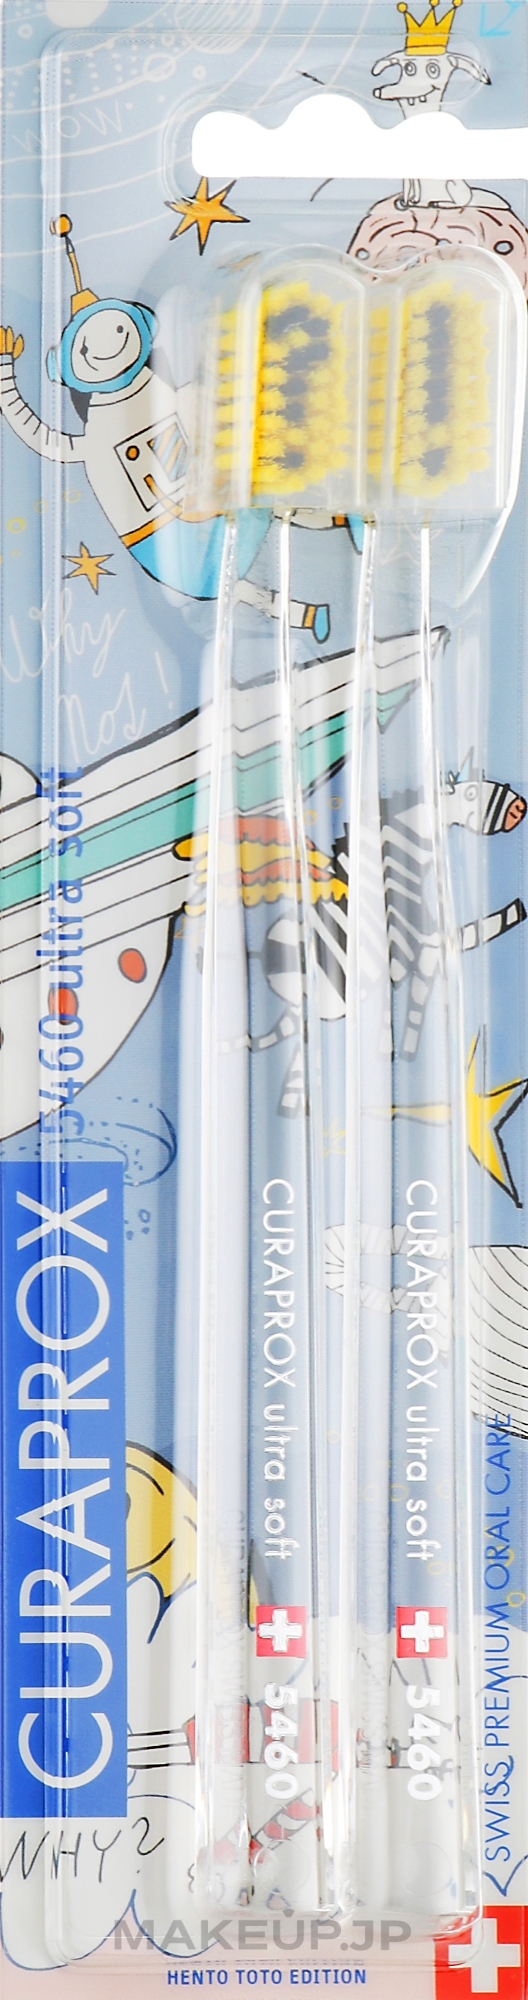 Toothbrush Set "Hento Toto Edition" 5460 Ultra Soft, 2 pcs, transparent - Curaprox — photo 2 szt.